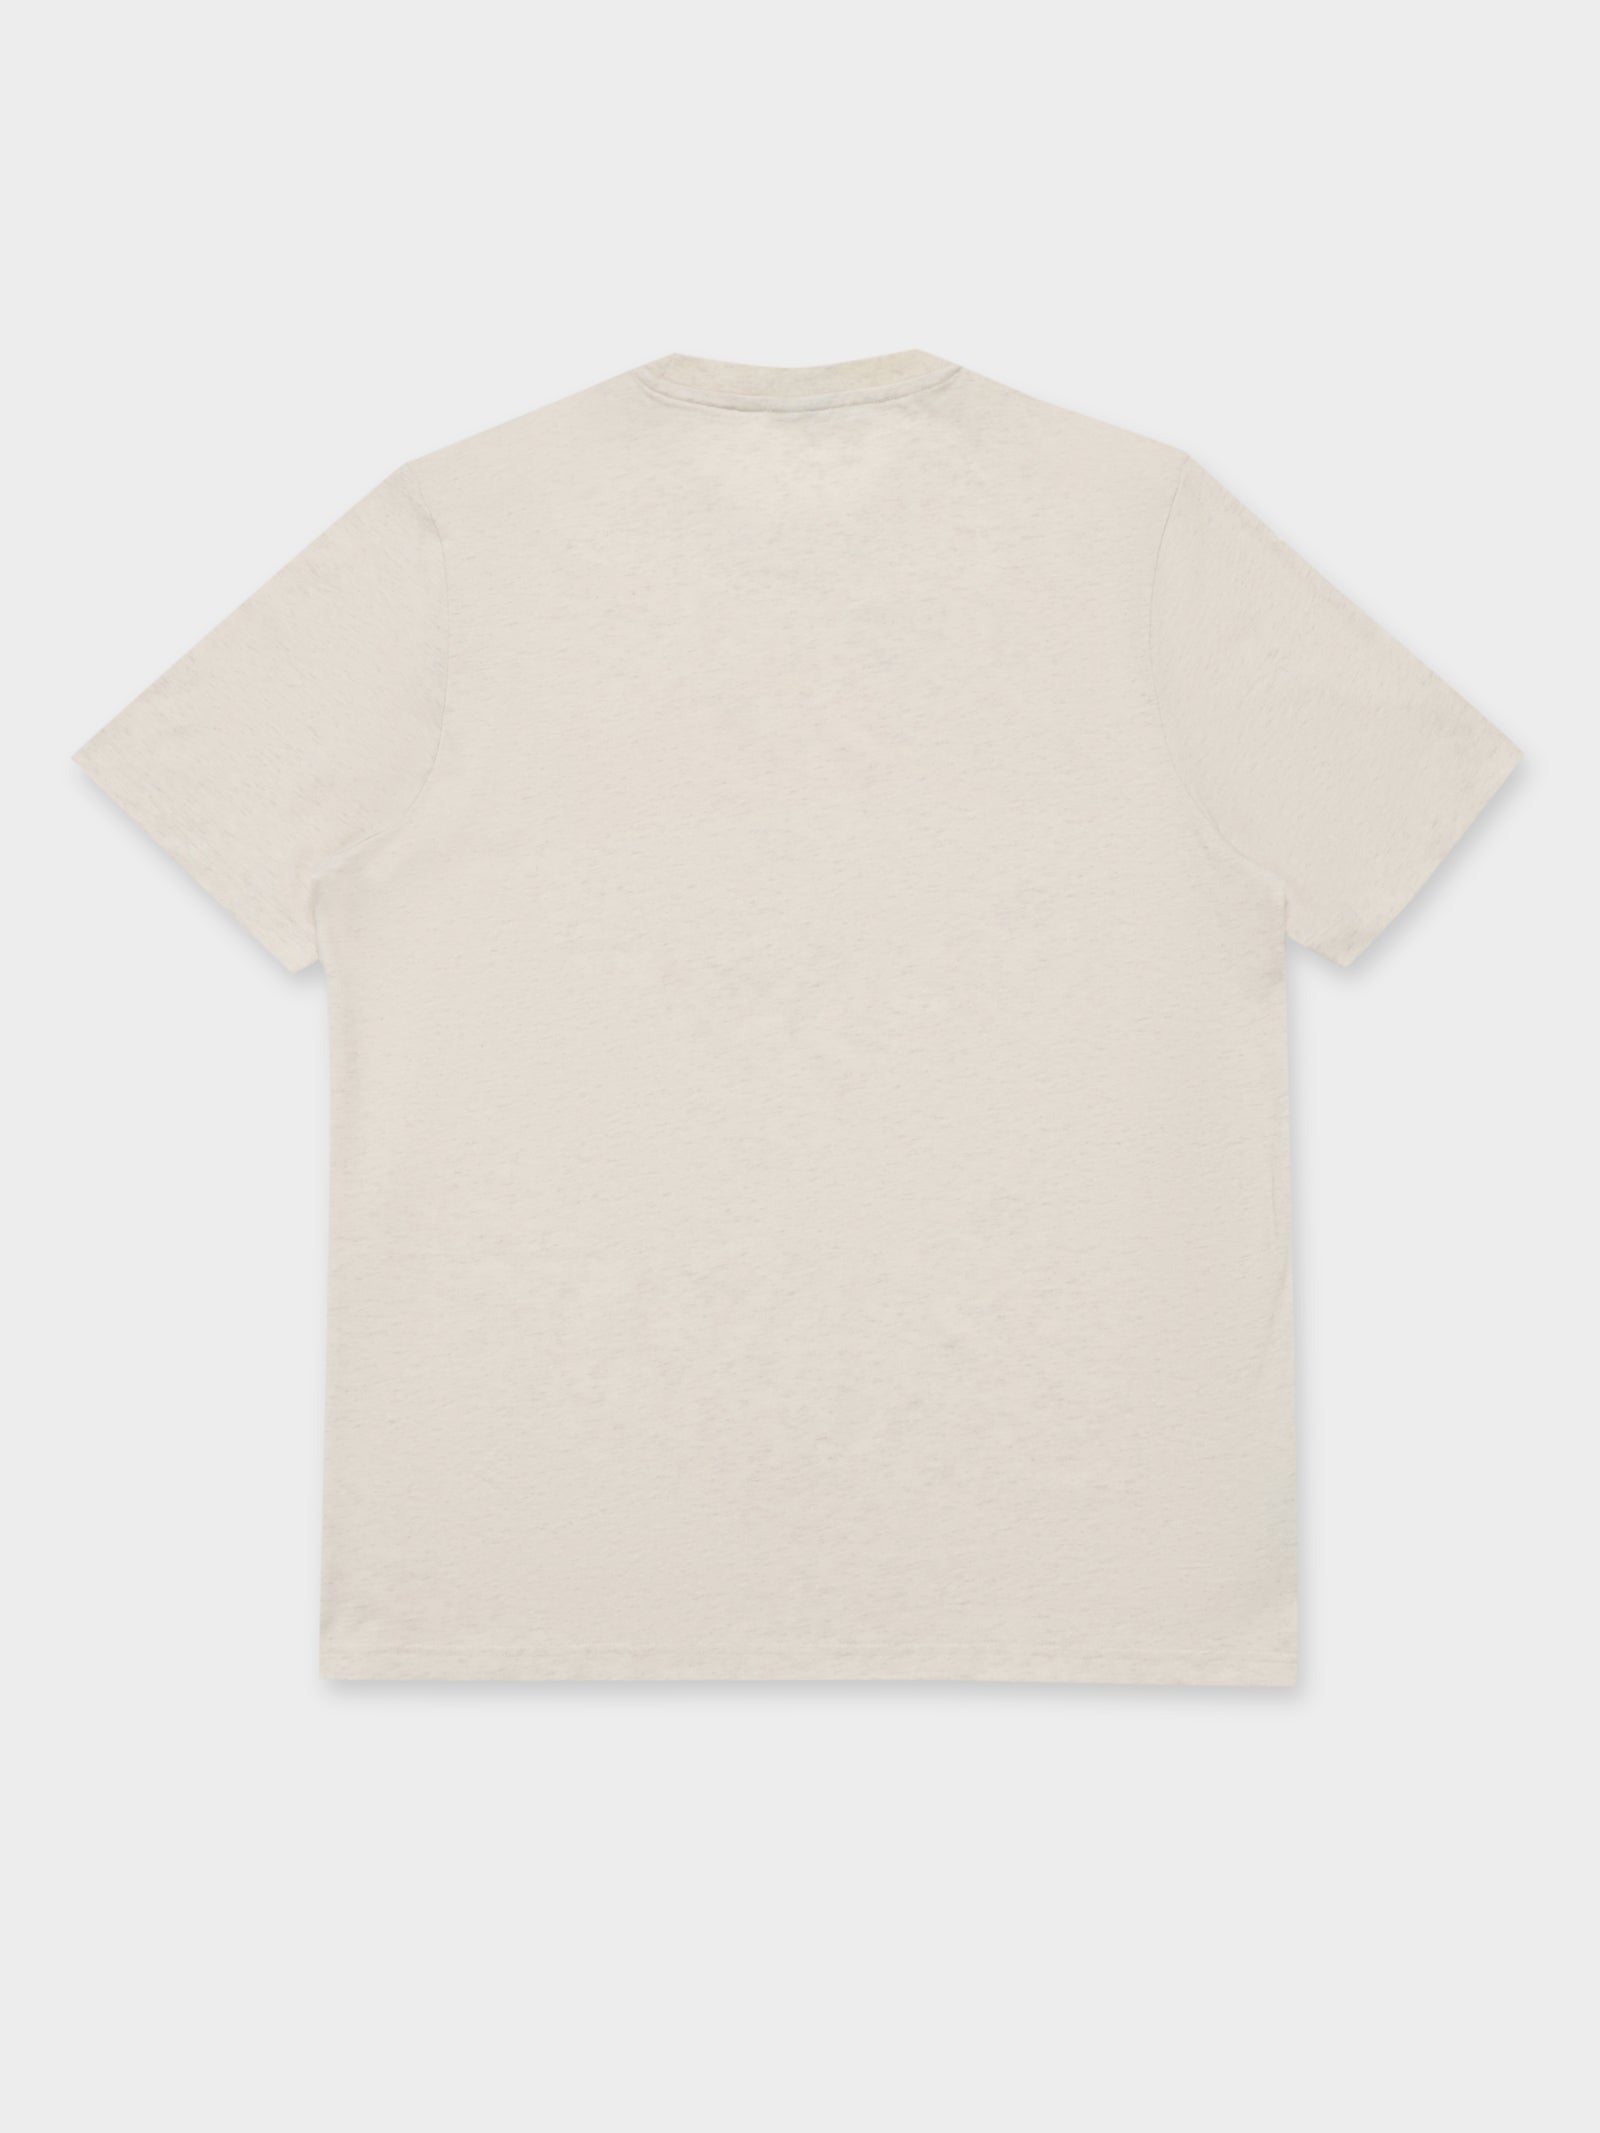 Rifta Metro AAC T-Shirt in White - Store Wonder Glue